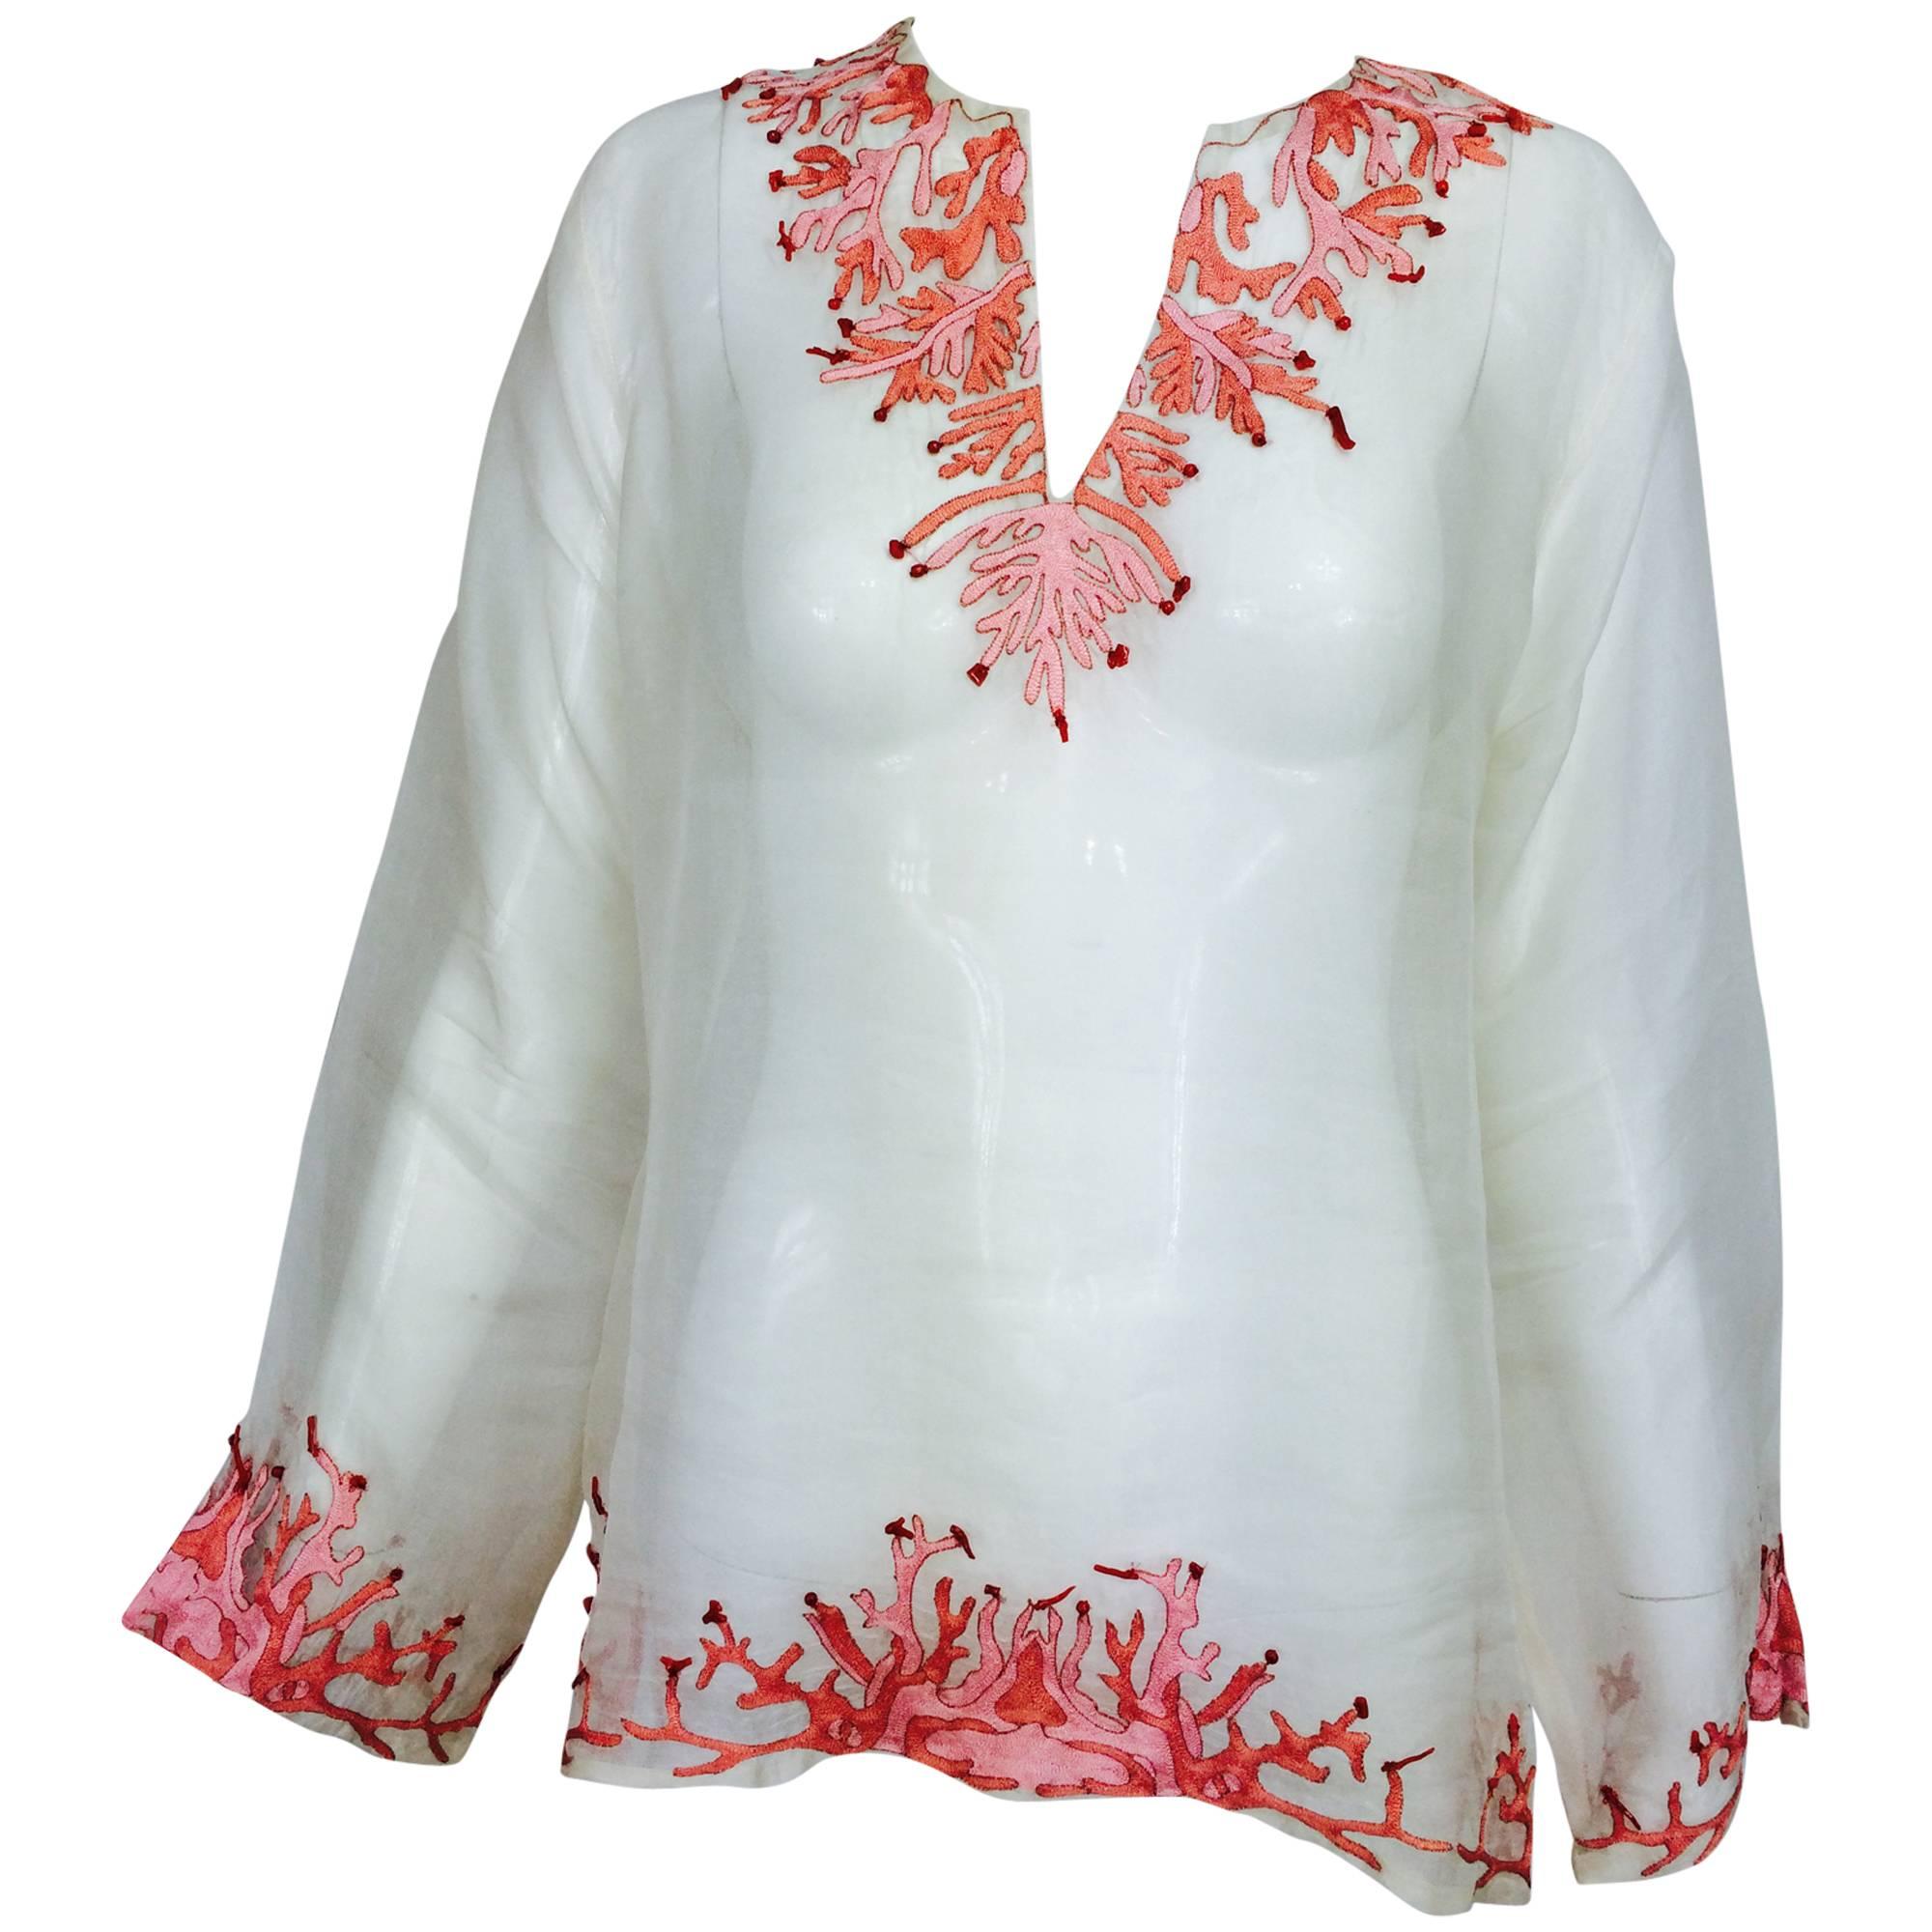 Jeannie McQueeny white silk organza coral embroidered tunic top